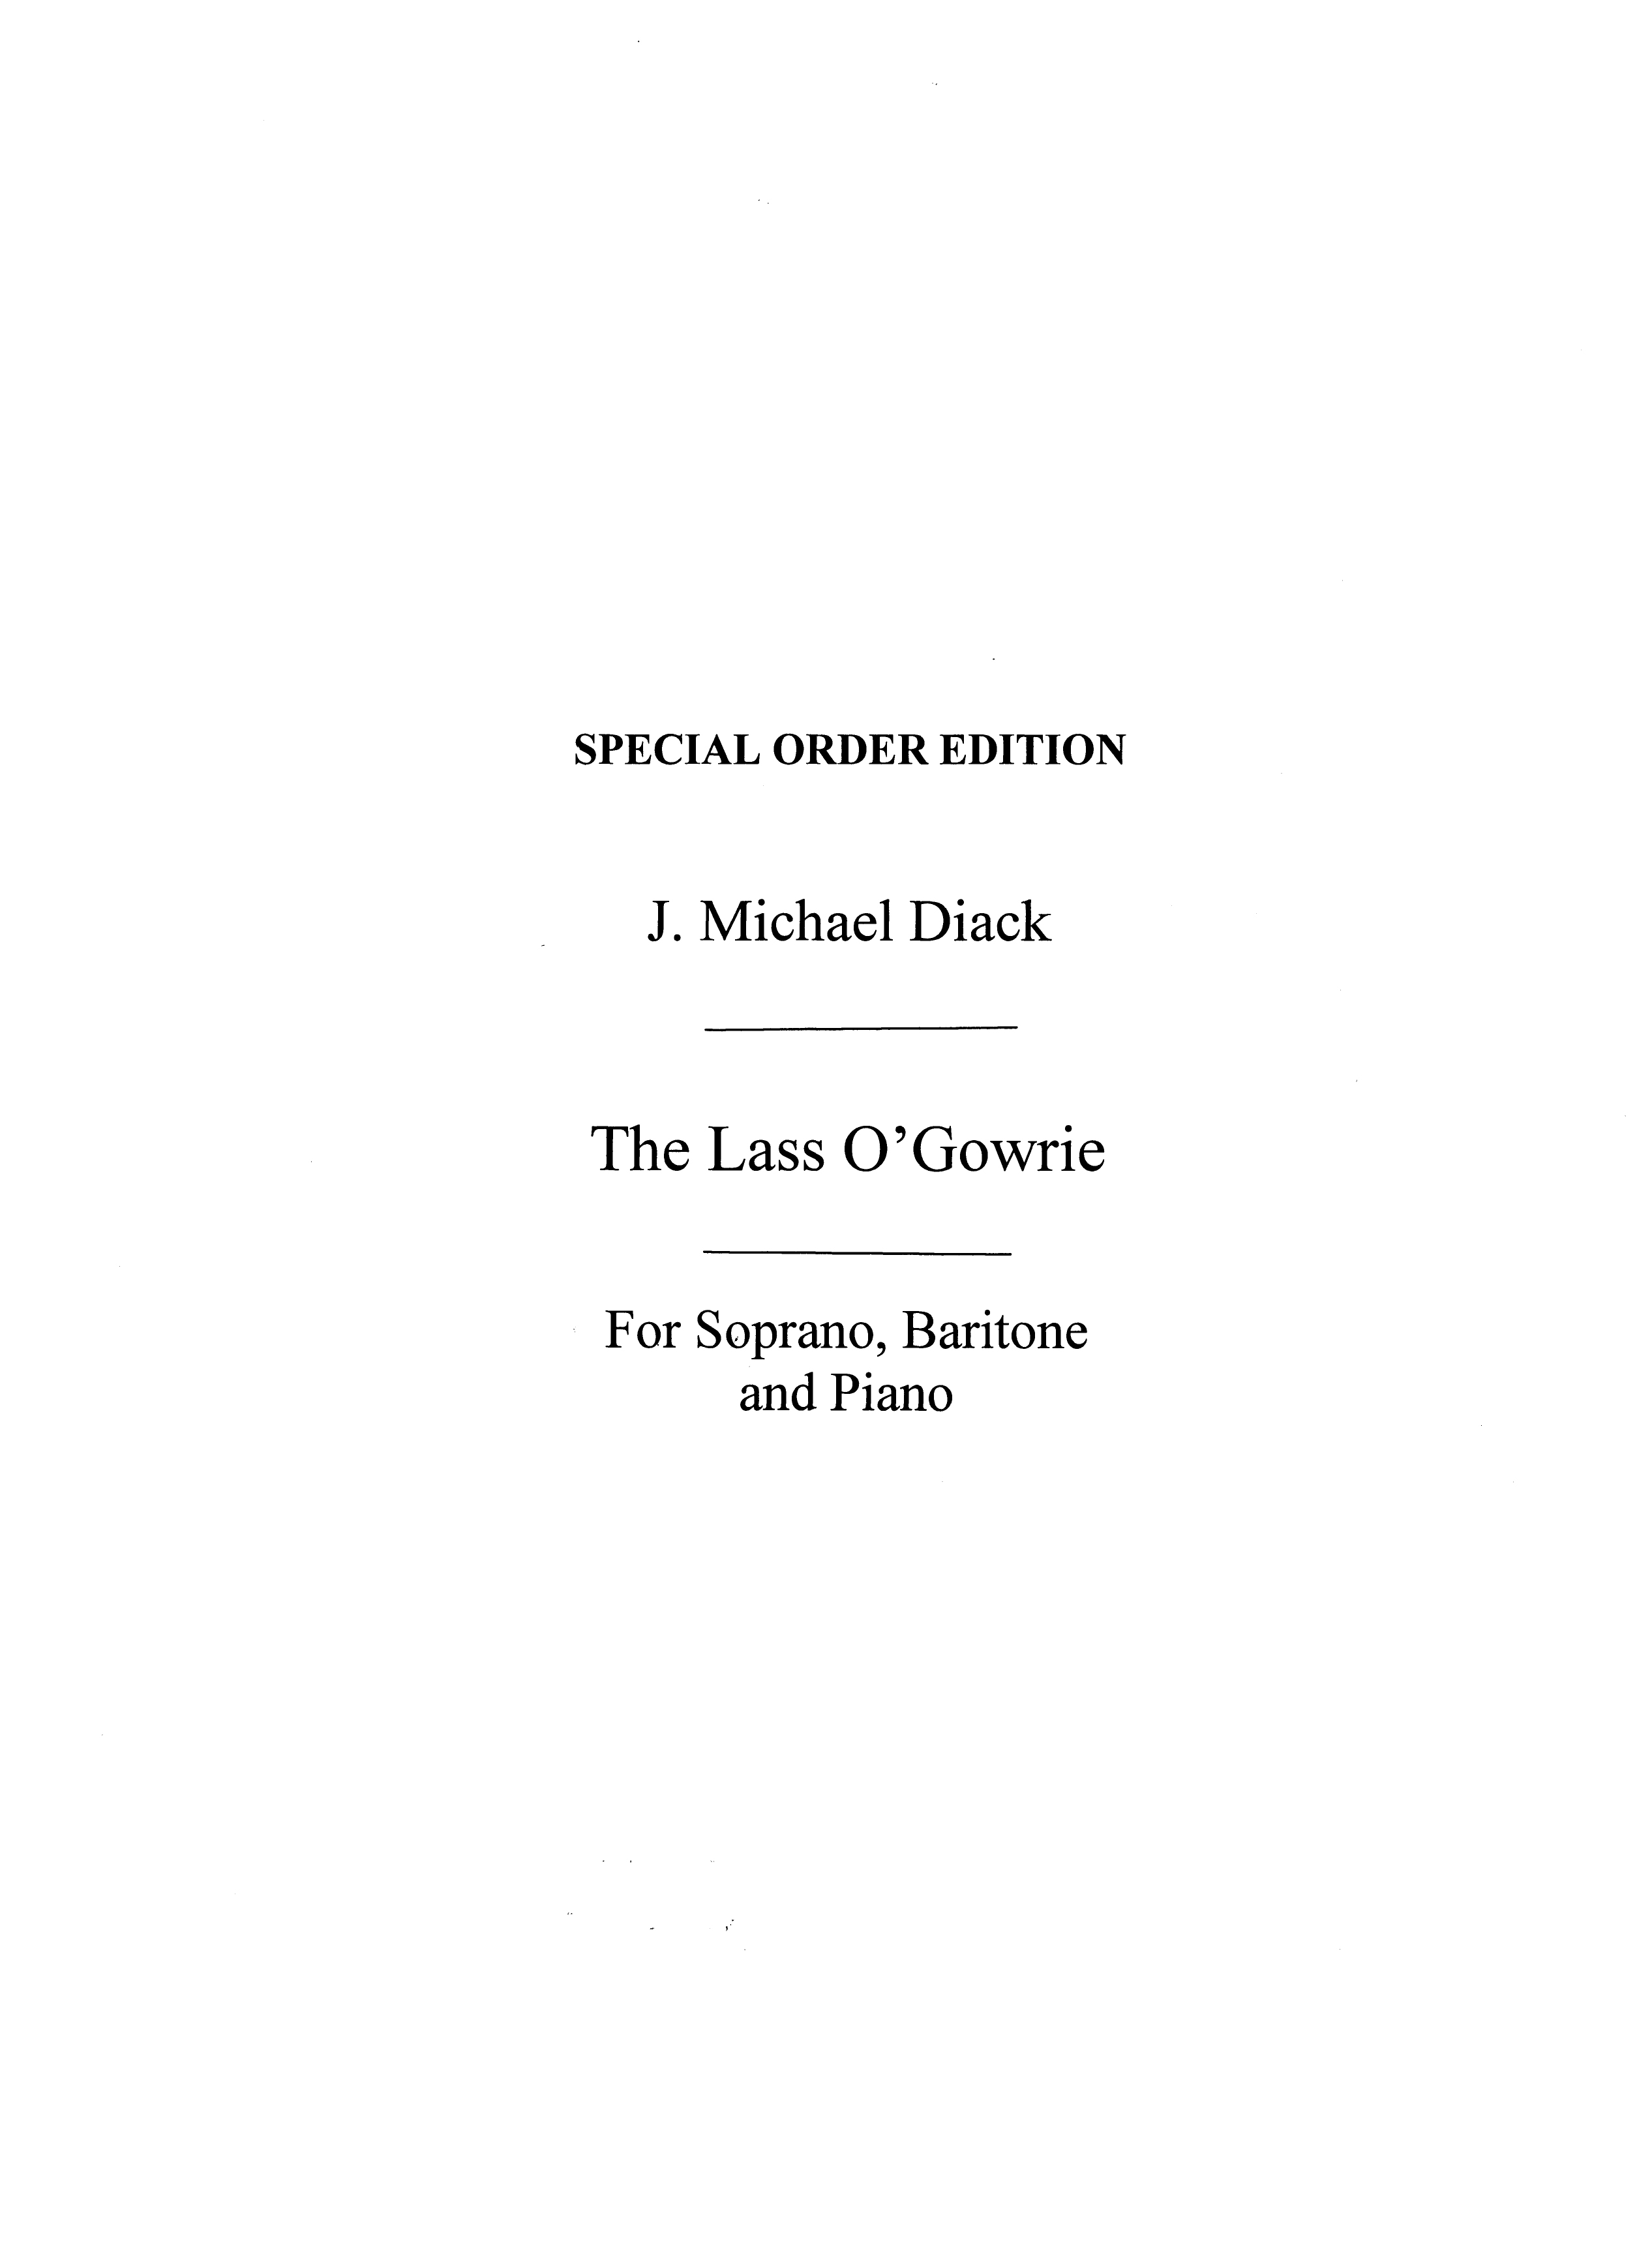 J. Michael Diack: The Lass O' Gowrie Soprano/Baritone Duet/Piano